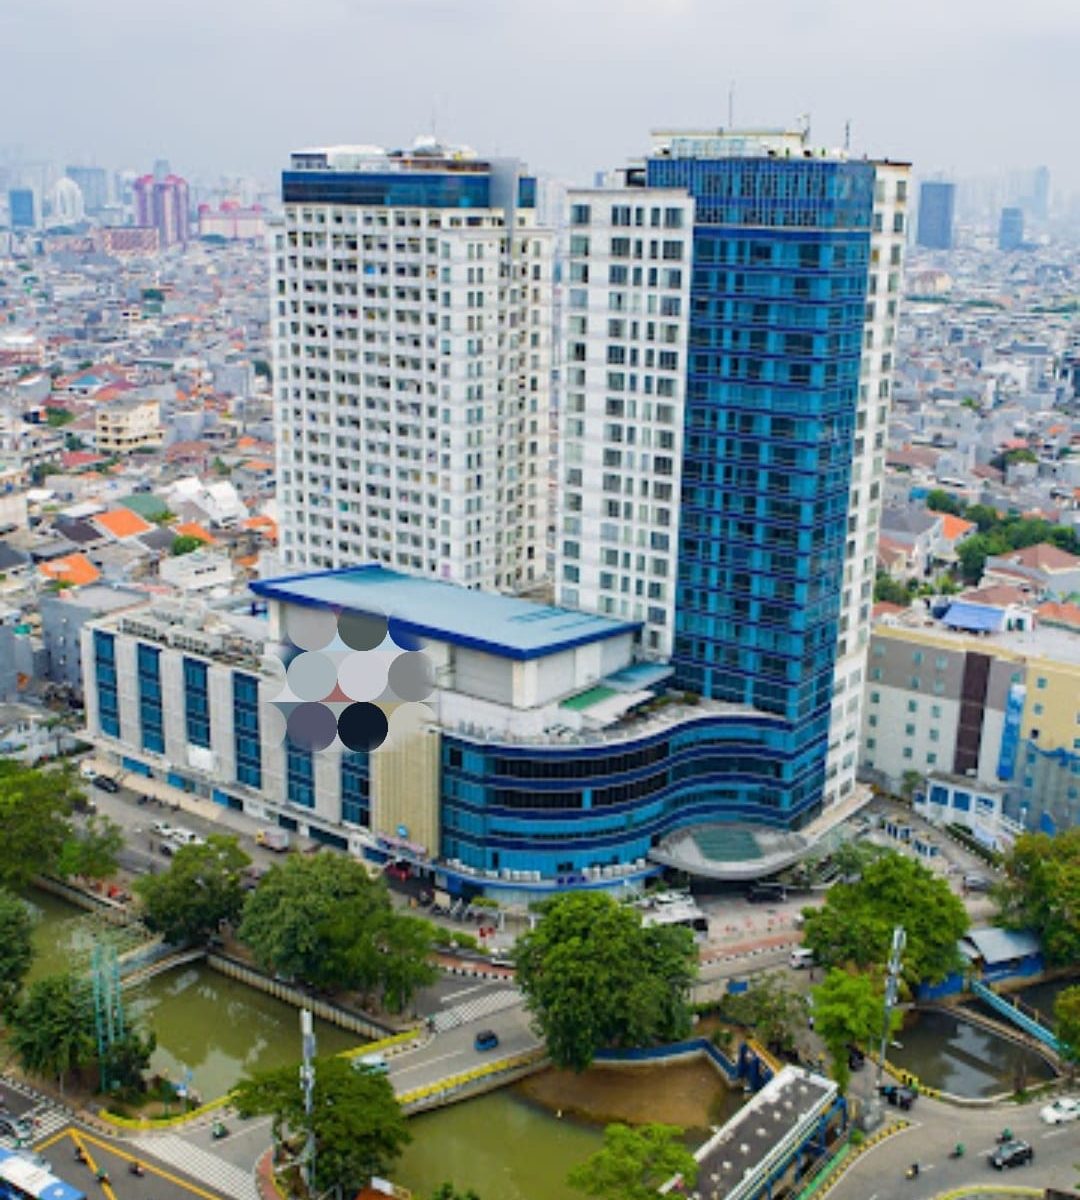 Hotel Jakarta